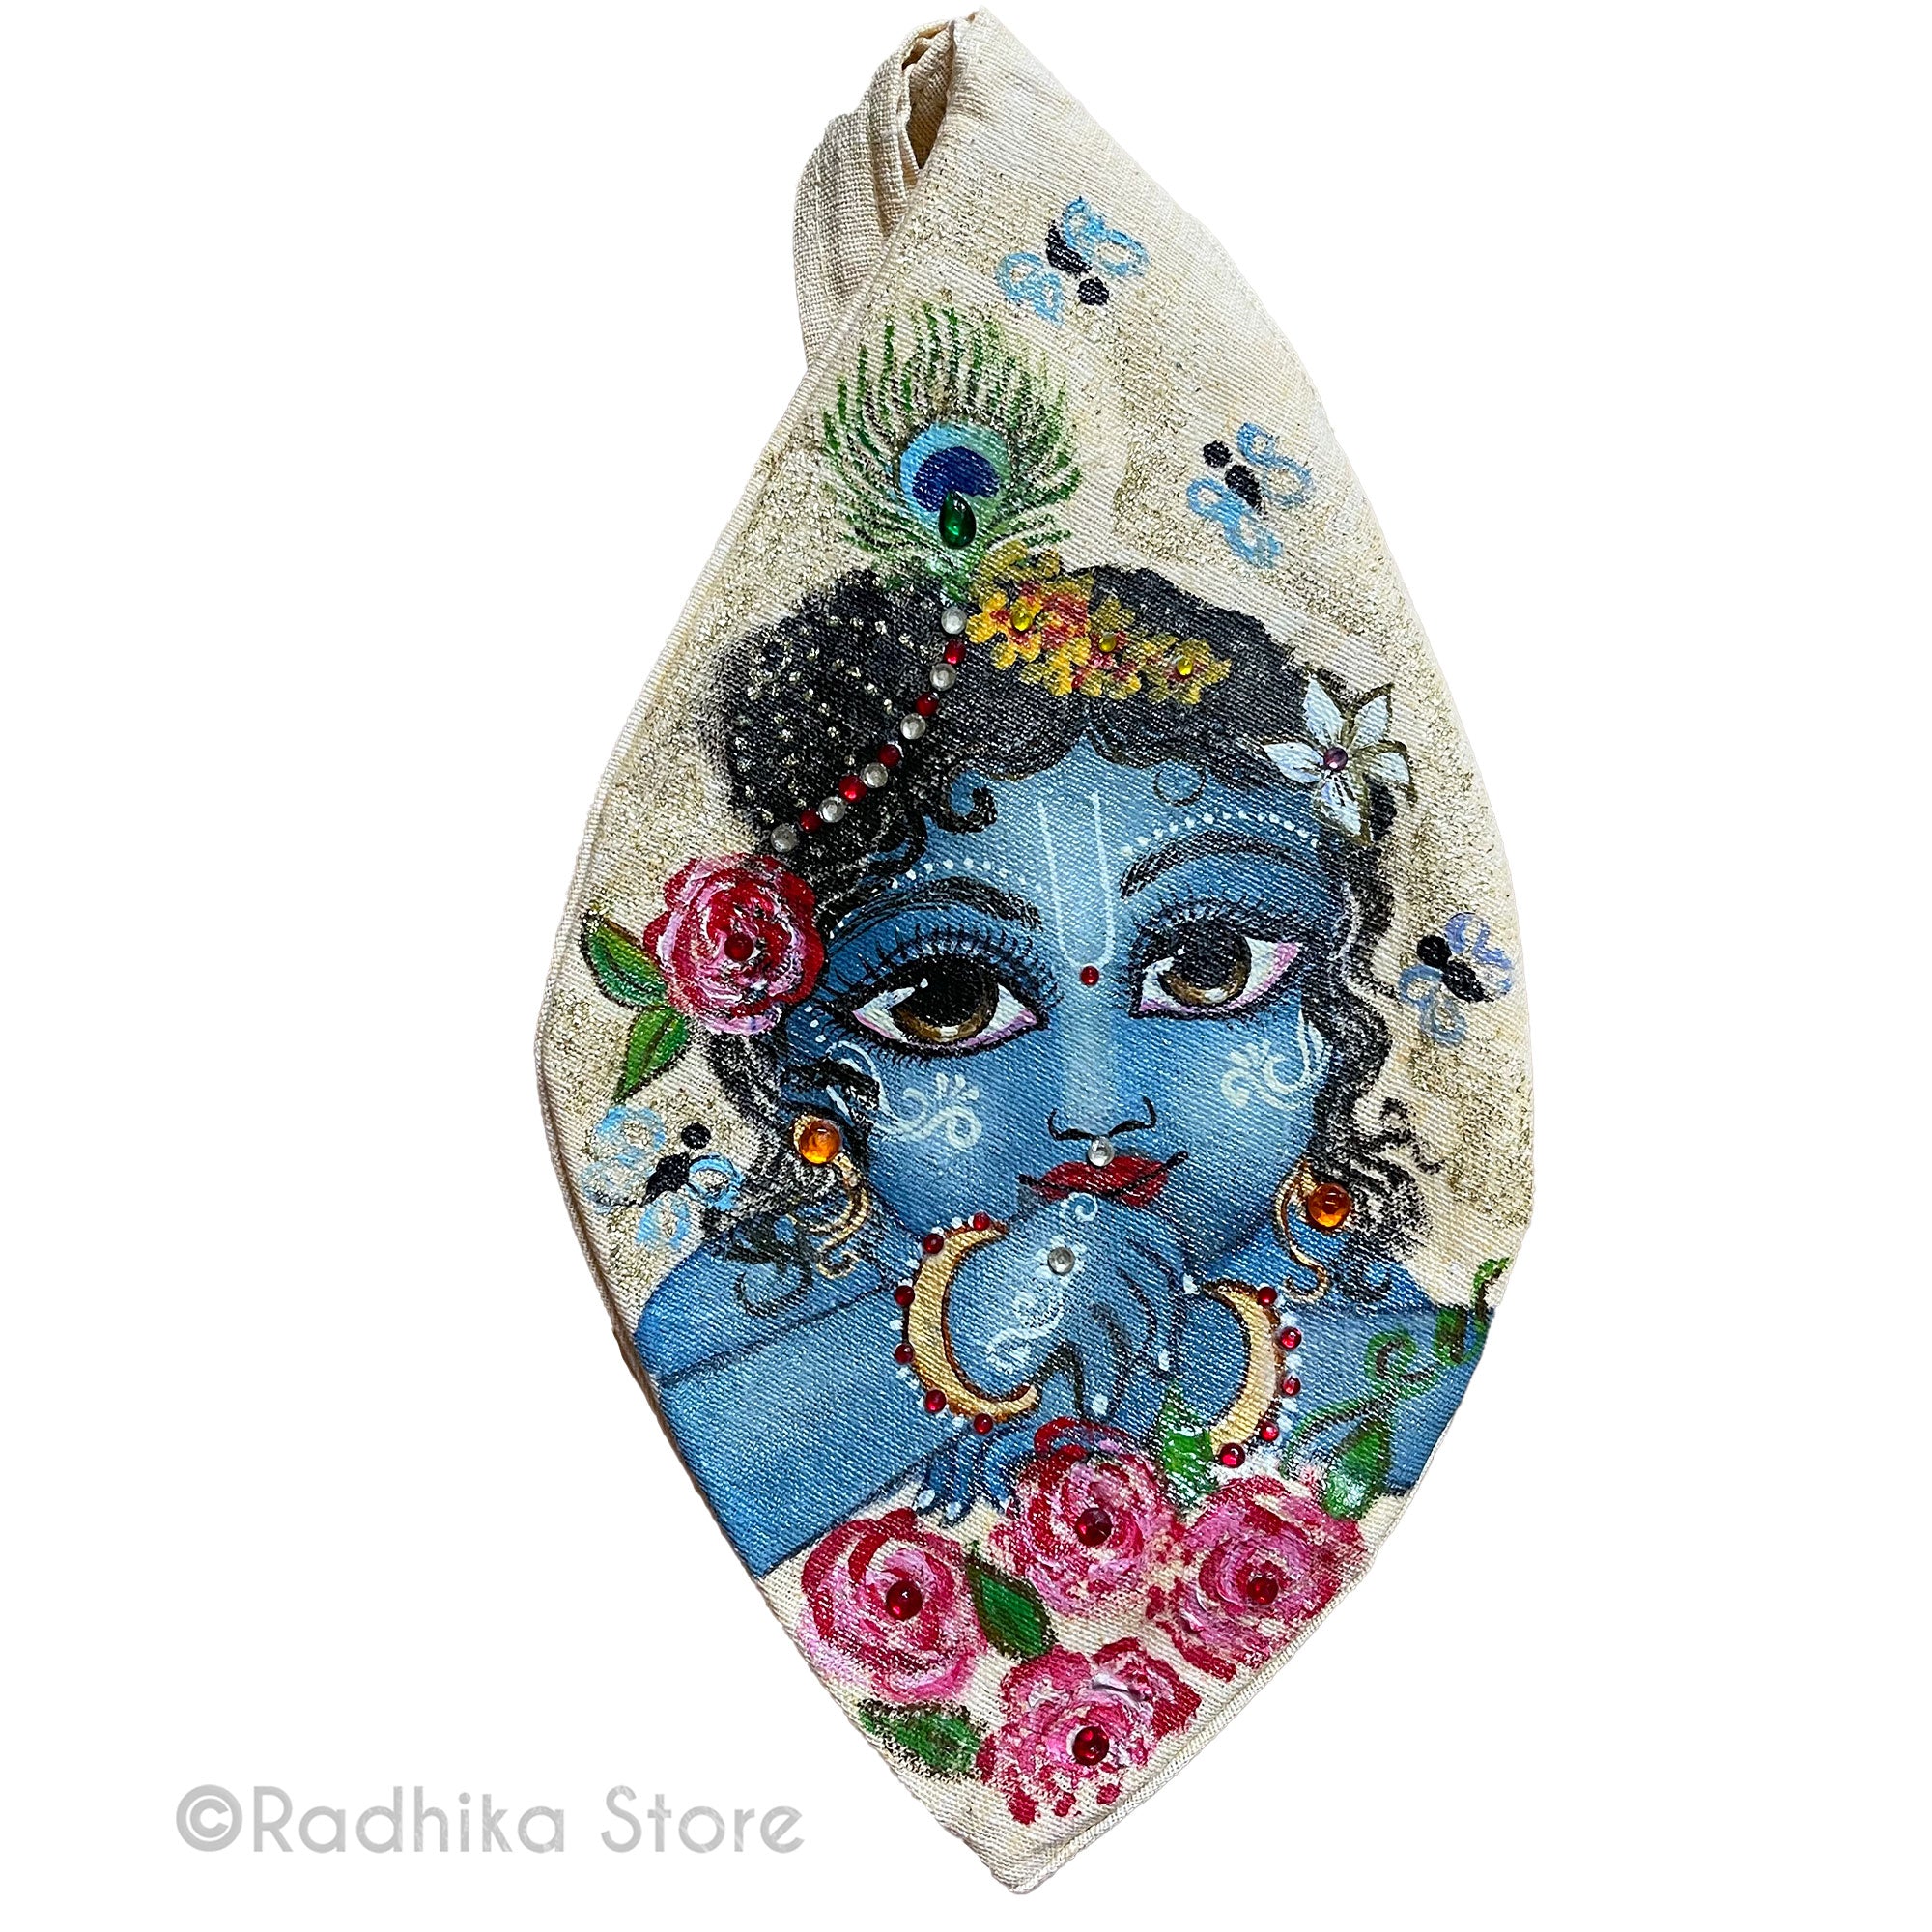 I Am Your Gopala - Hand Painted and Jeweled - Bead Bag